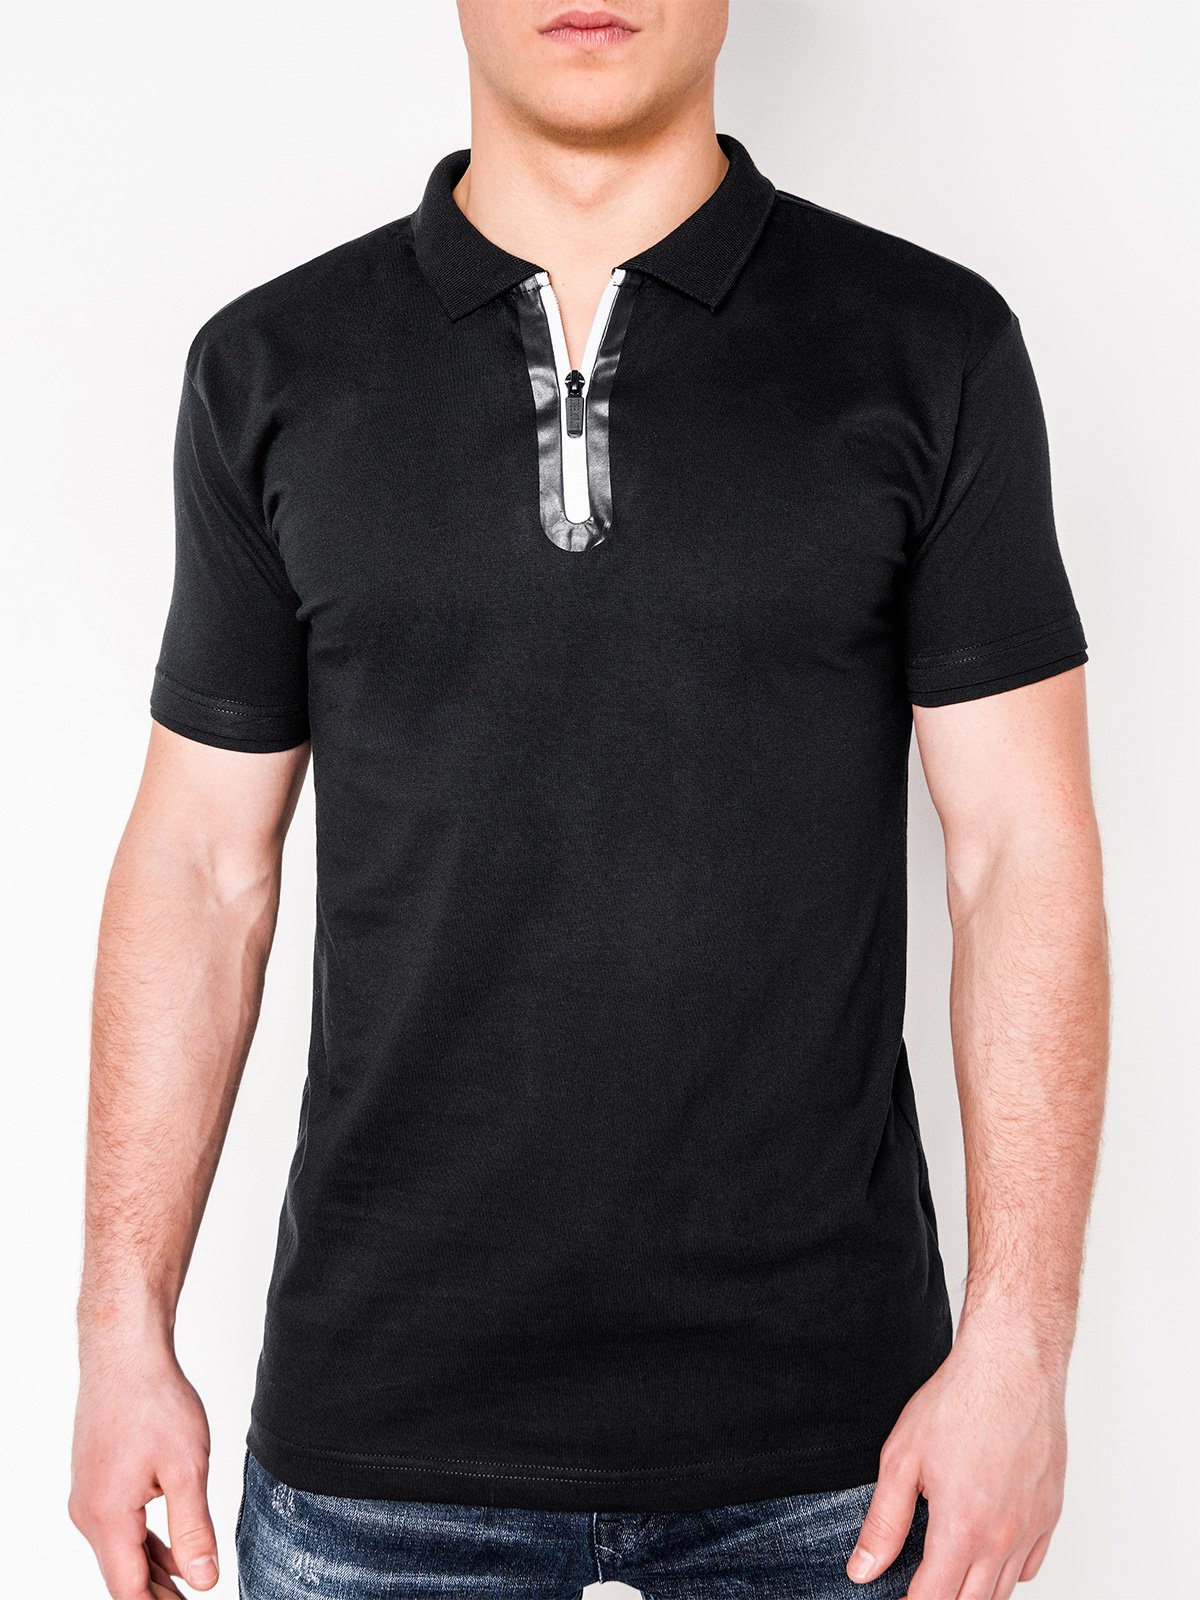 Men's plain polo shirt S664 - black | MODONE wholesale - Clothing For Men